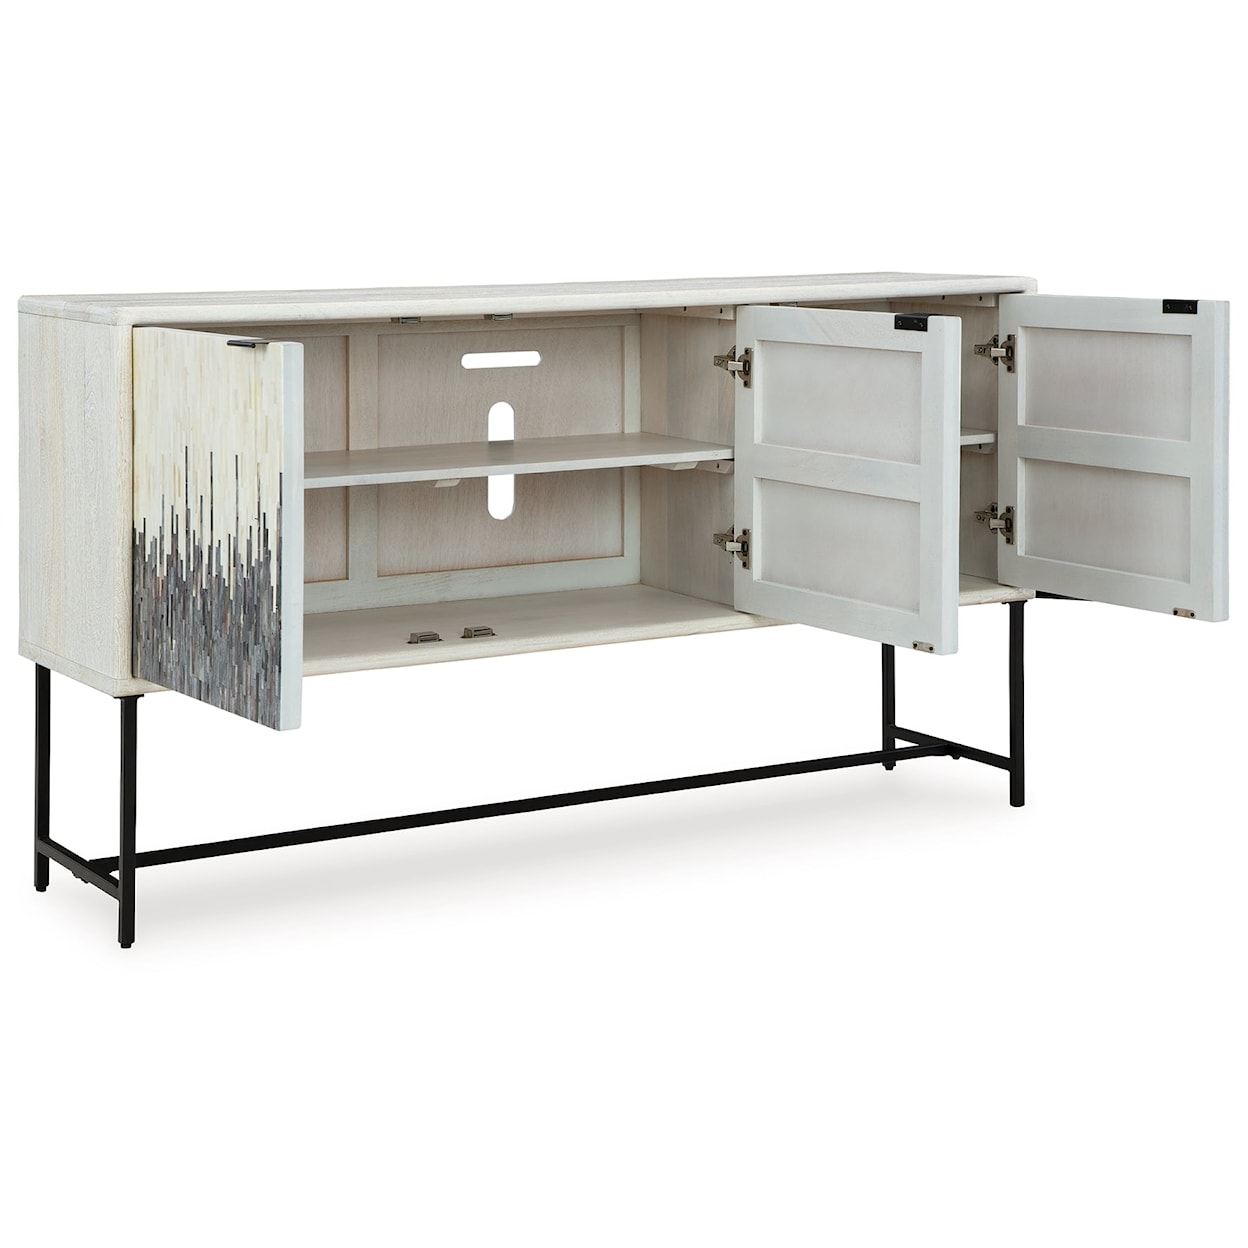 Ashley Furniture Signature Design Freyton Accent Cabinet